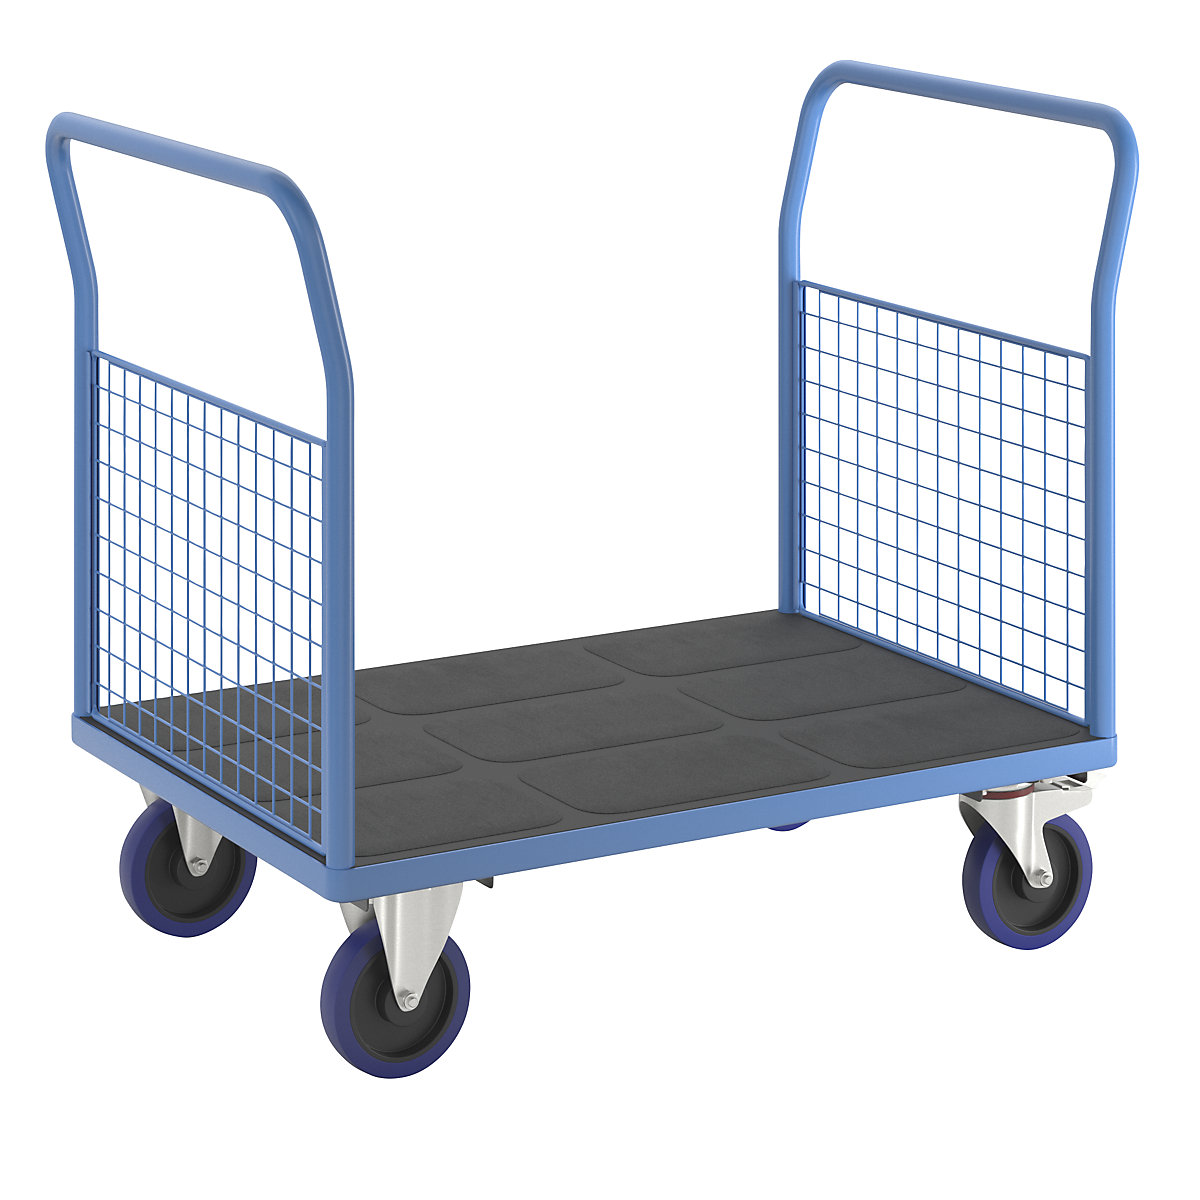 Plošinový vozík s mřížkovými stěnami - eurokraft pro